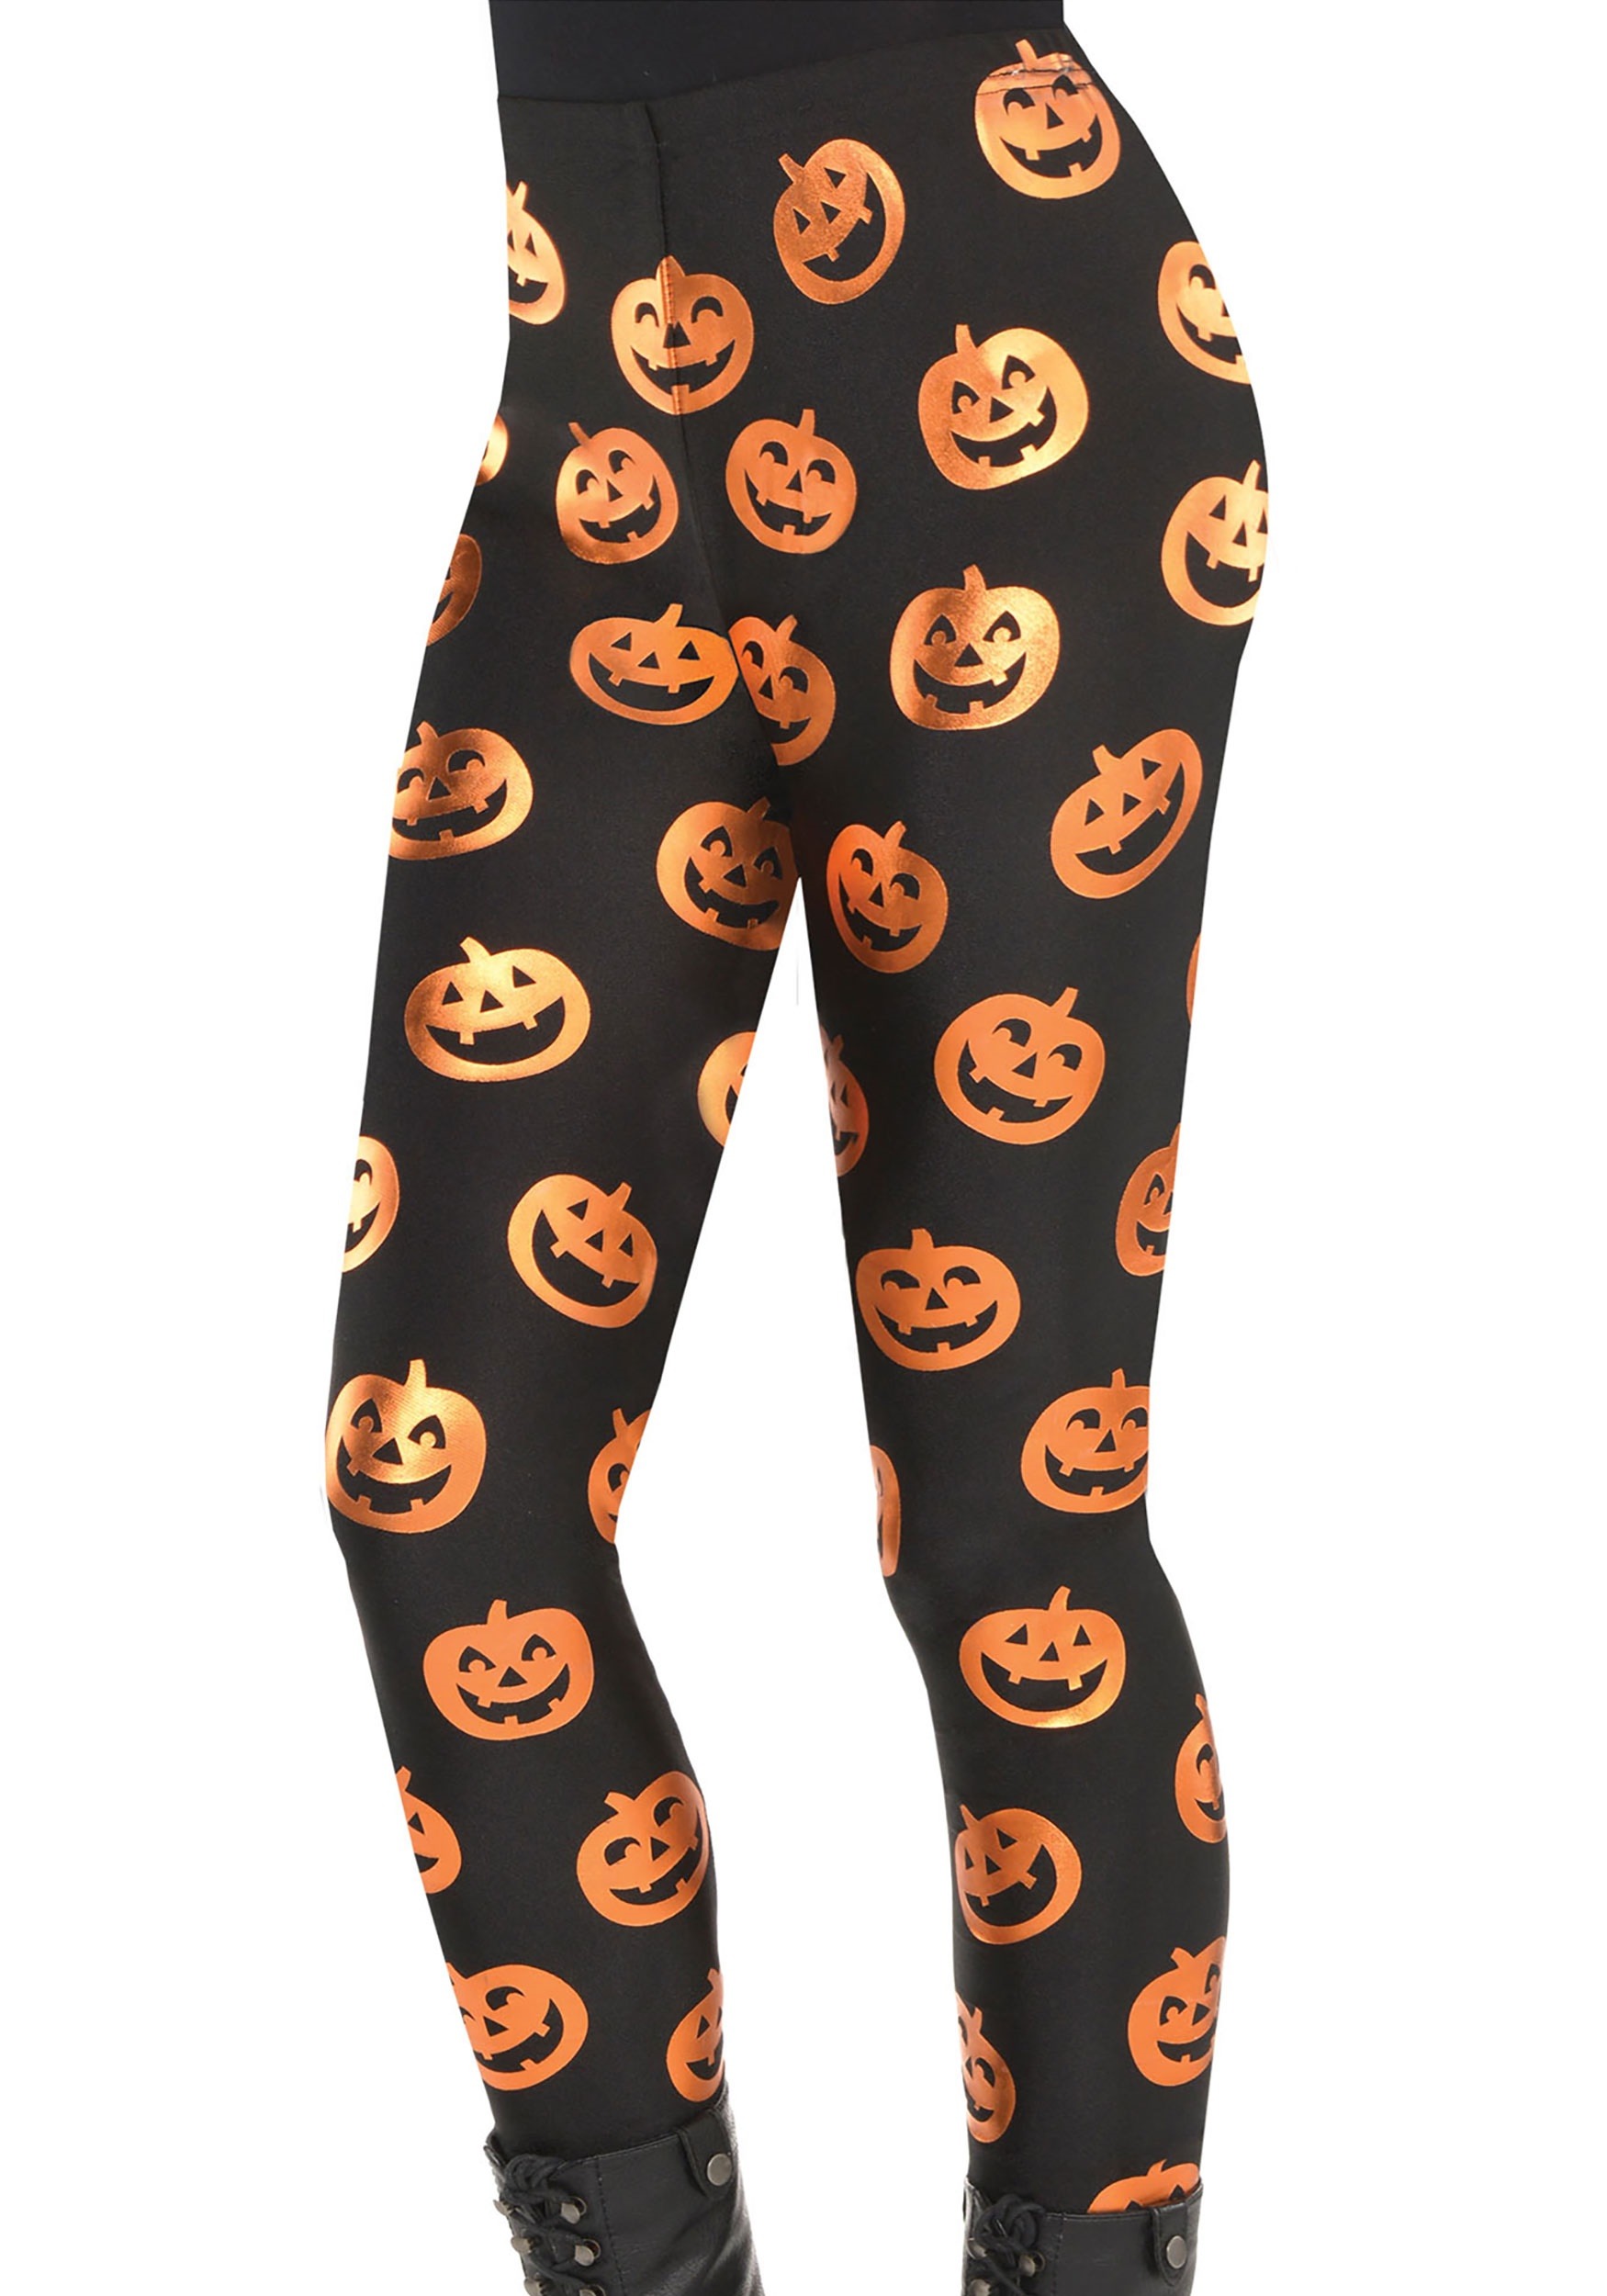 https://images.halloweencostumes.ca/products/49566/1-1/pumpkin-leggings.jpg